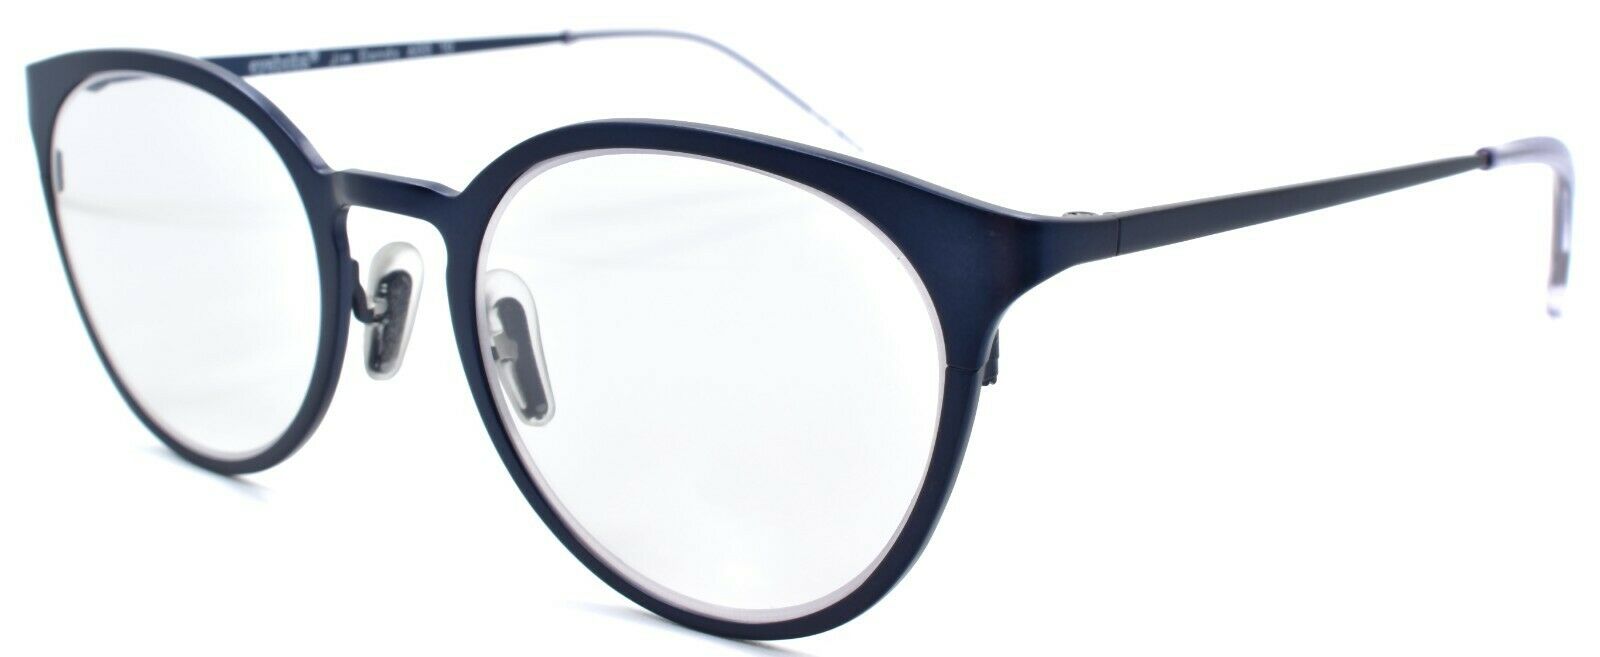 1-Eyebobs Jim Dandy 600 10 Reading Glasses Navy Blue +1.00-842754137799-IKSpecs